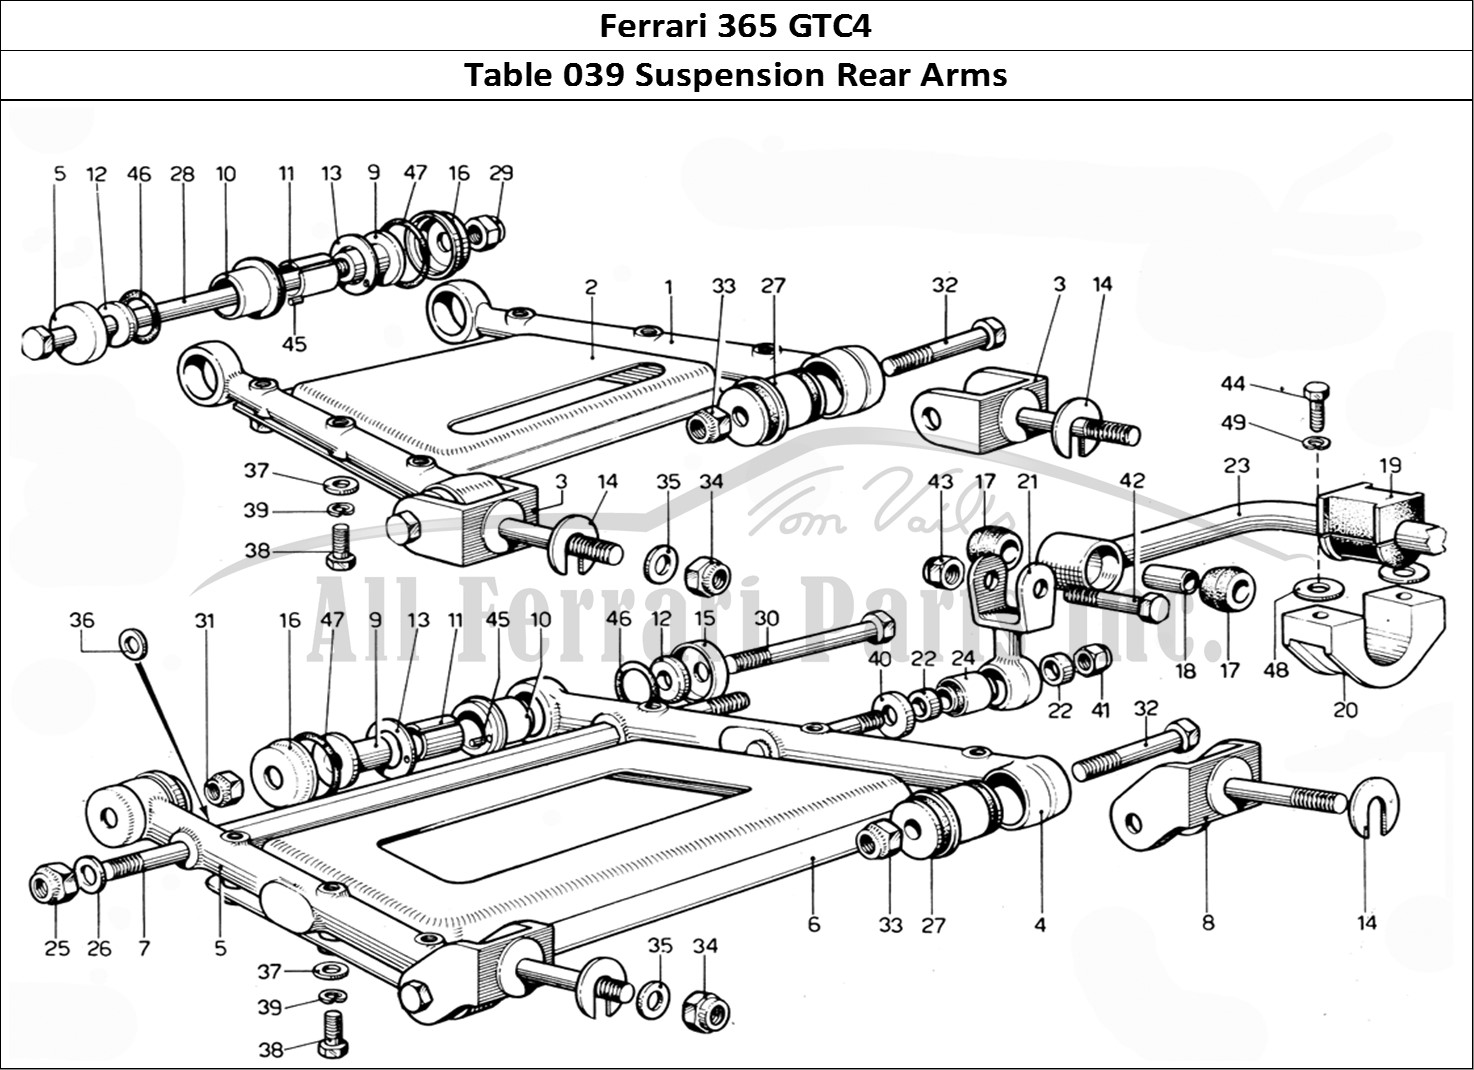 Ferrari Parts Ferrari 365 GTC4 (Mechanical) Page 039 Rear suspension arms